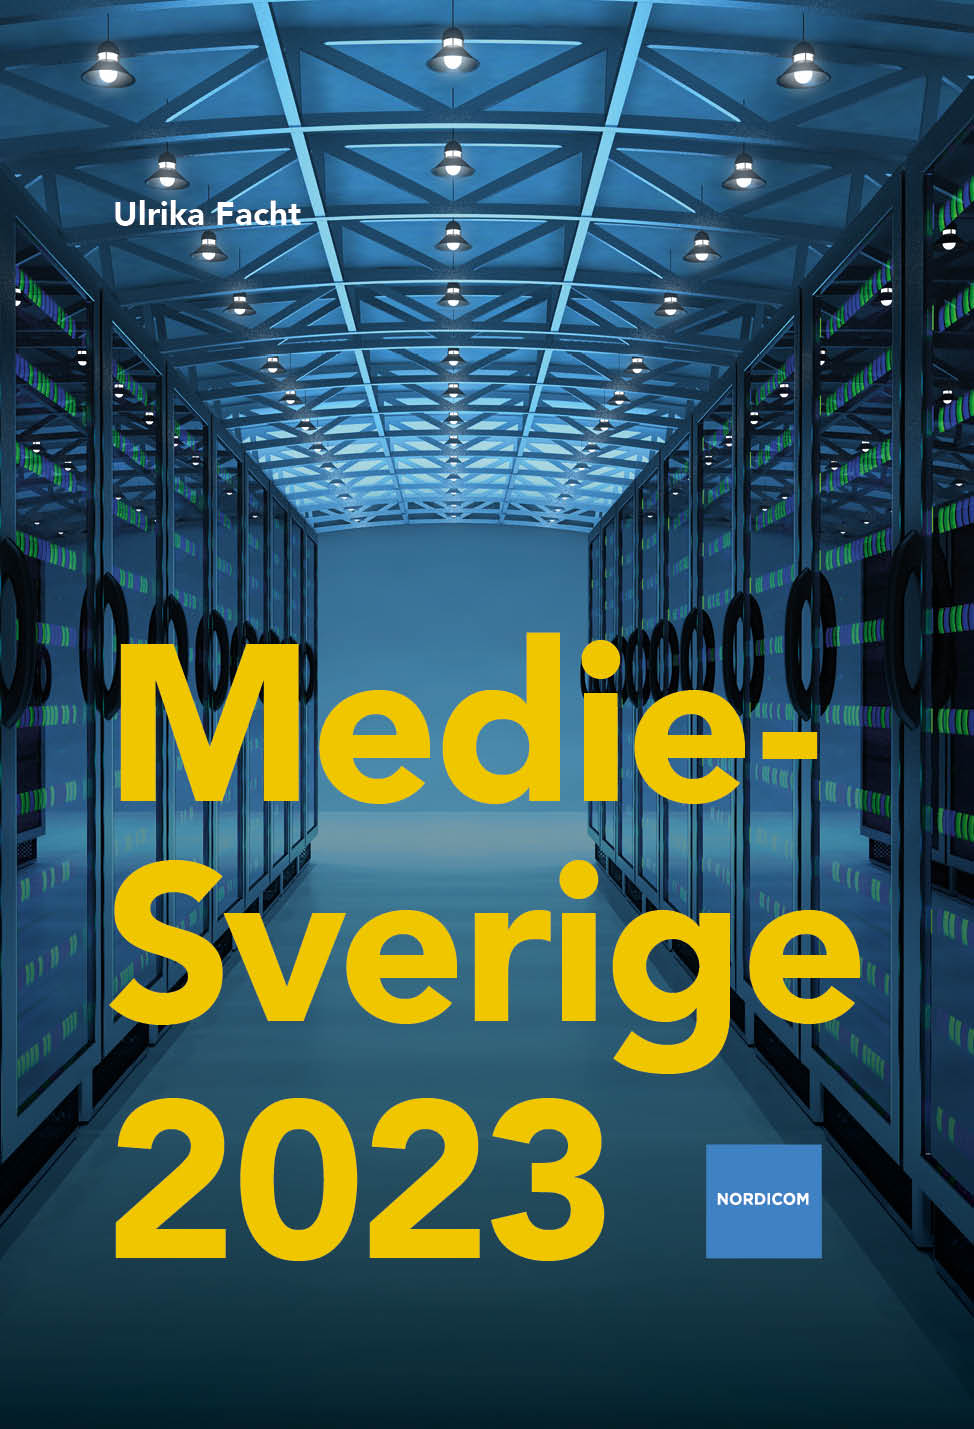 Cover of MedieSverige 2023. Server room with blue lighting.